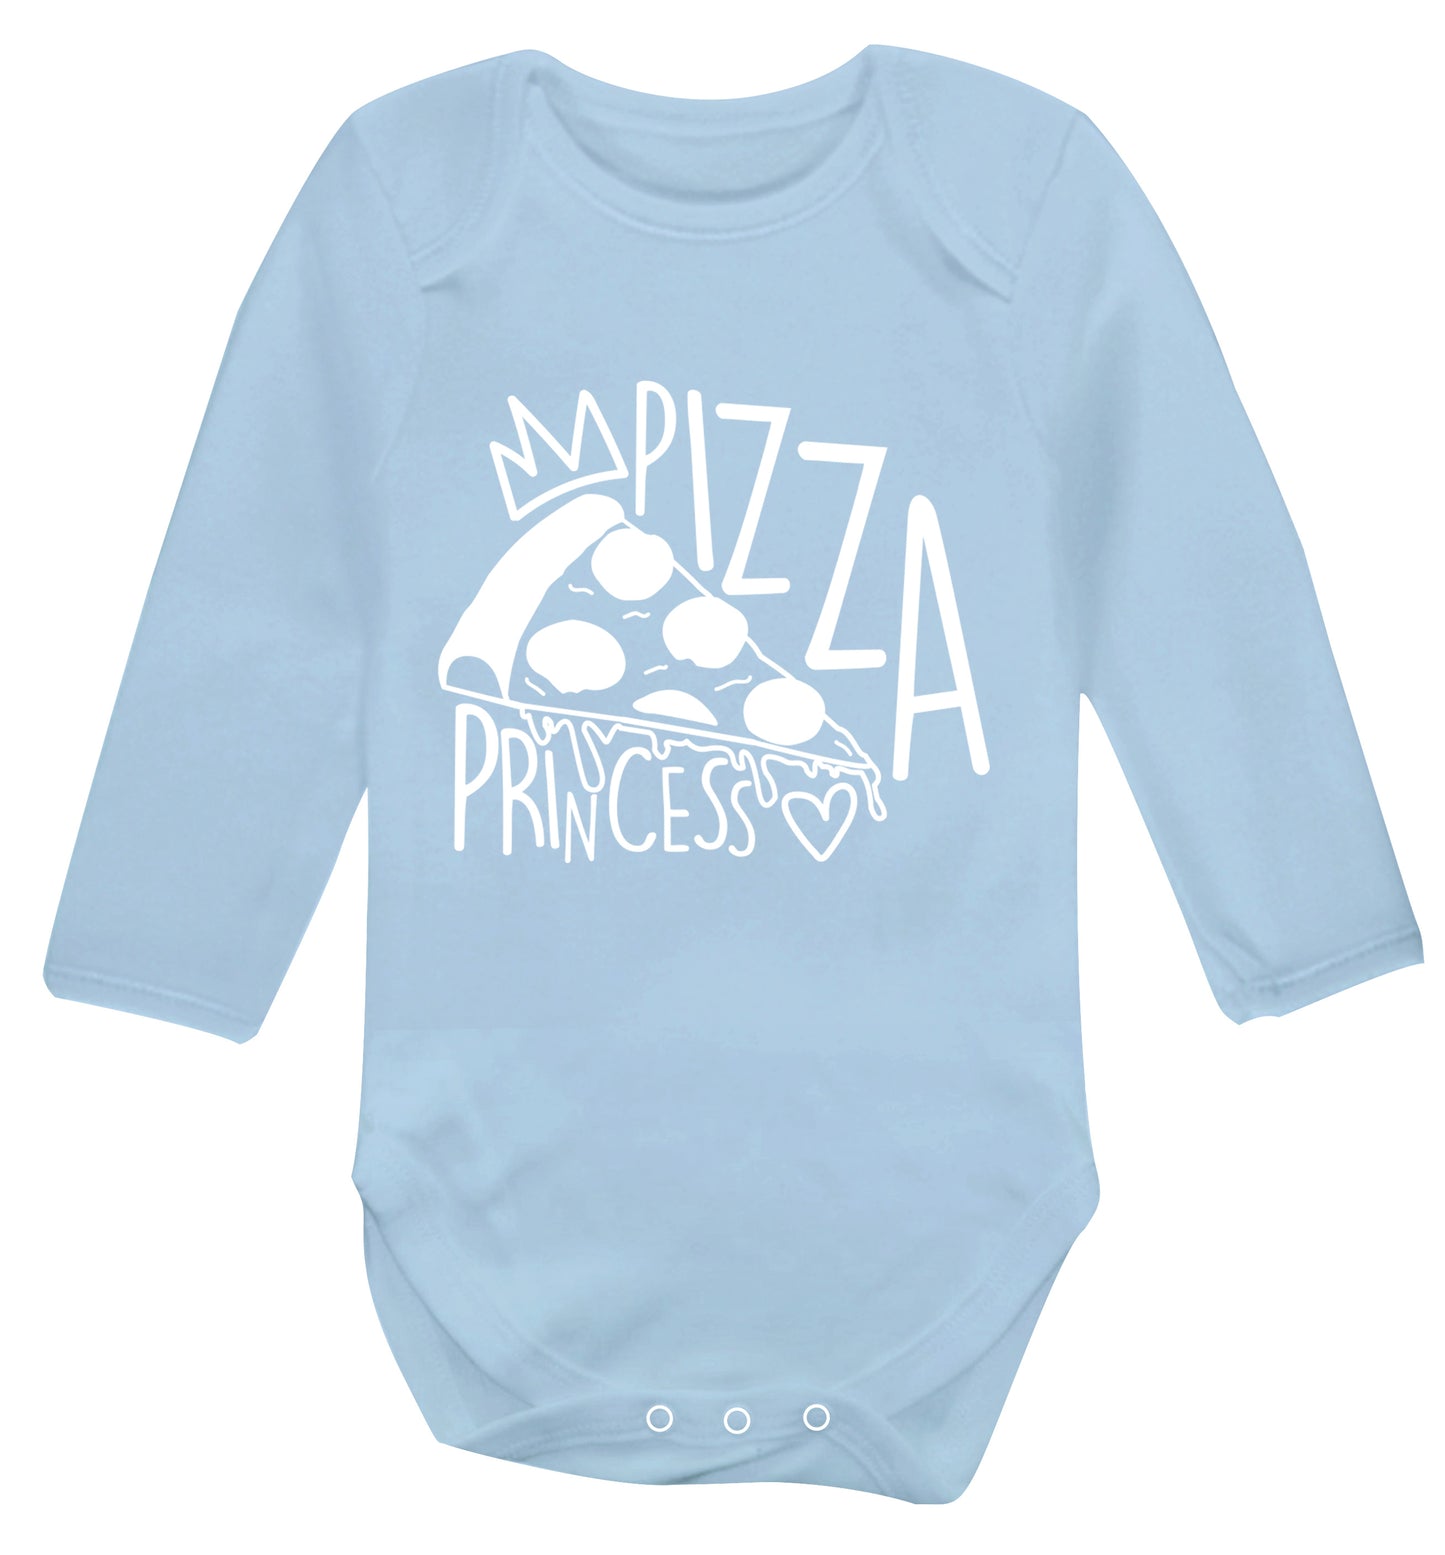 Pizza Princess Baby Vest long sleeved pale blue 6-12 months